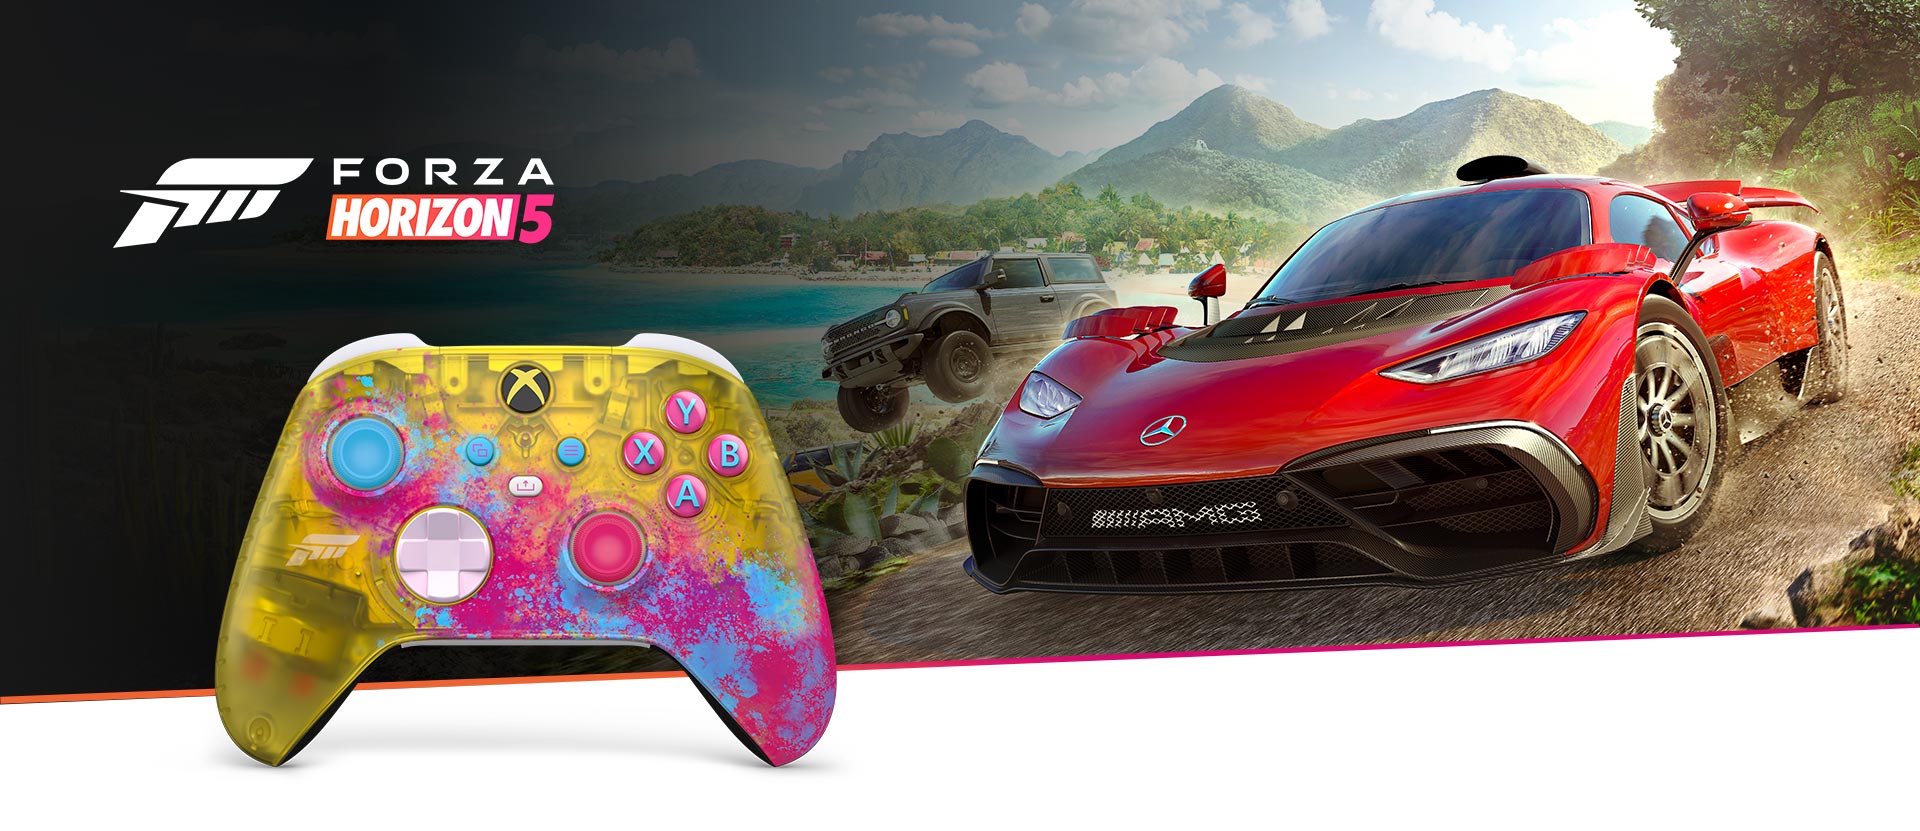  Trådløs Xbox-controller Forza Horizon 5 foran et nærbillede af controlleren